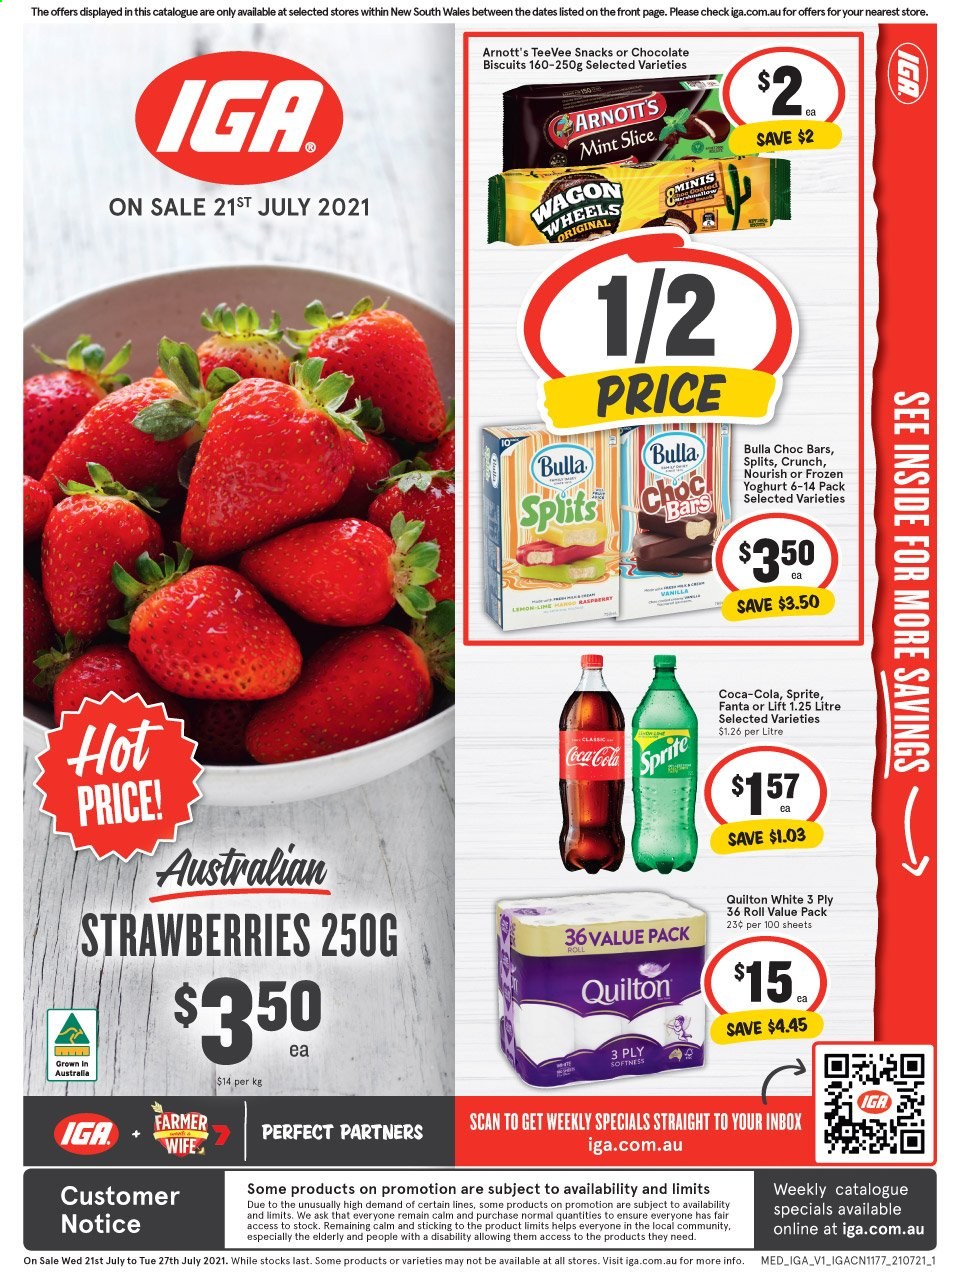 thumbnail - IGA Catalogue - 21 Jul 2021 - 27 Jul 2021 - Sales products - strawberries, yoghurt, frozen yoghurt, chocolate, snack, biscuit, Coca-Cola, Sprite, Fanta, Quilton. Page 1.